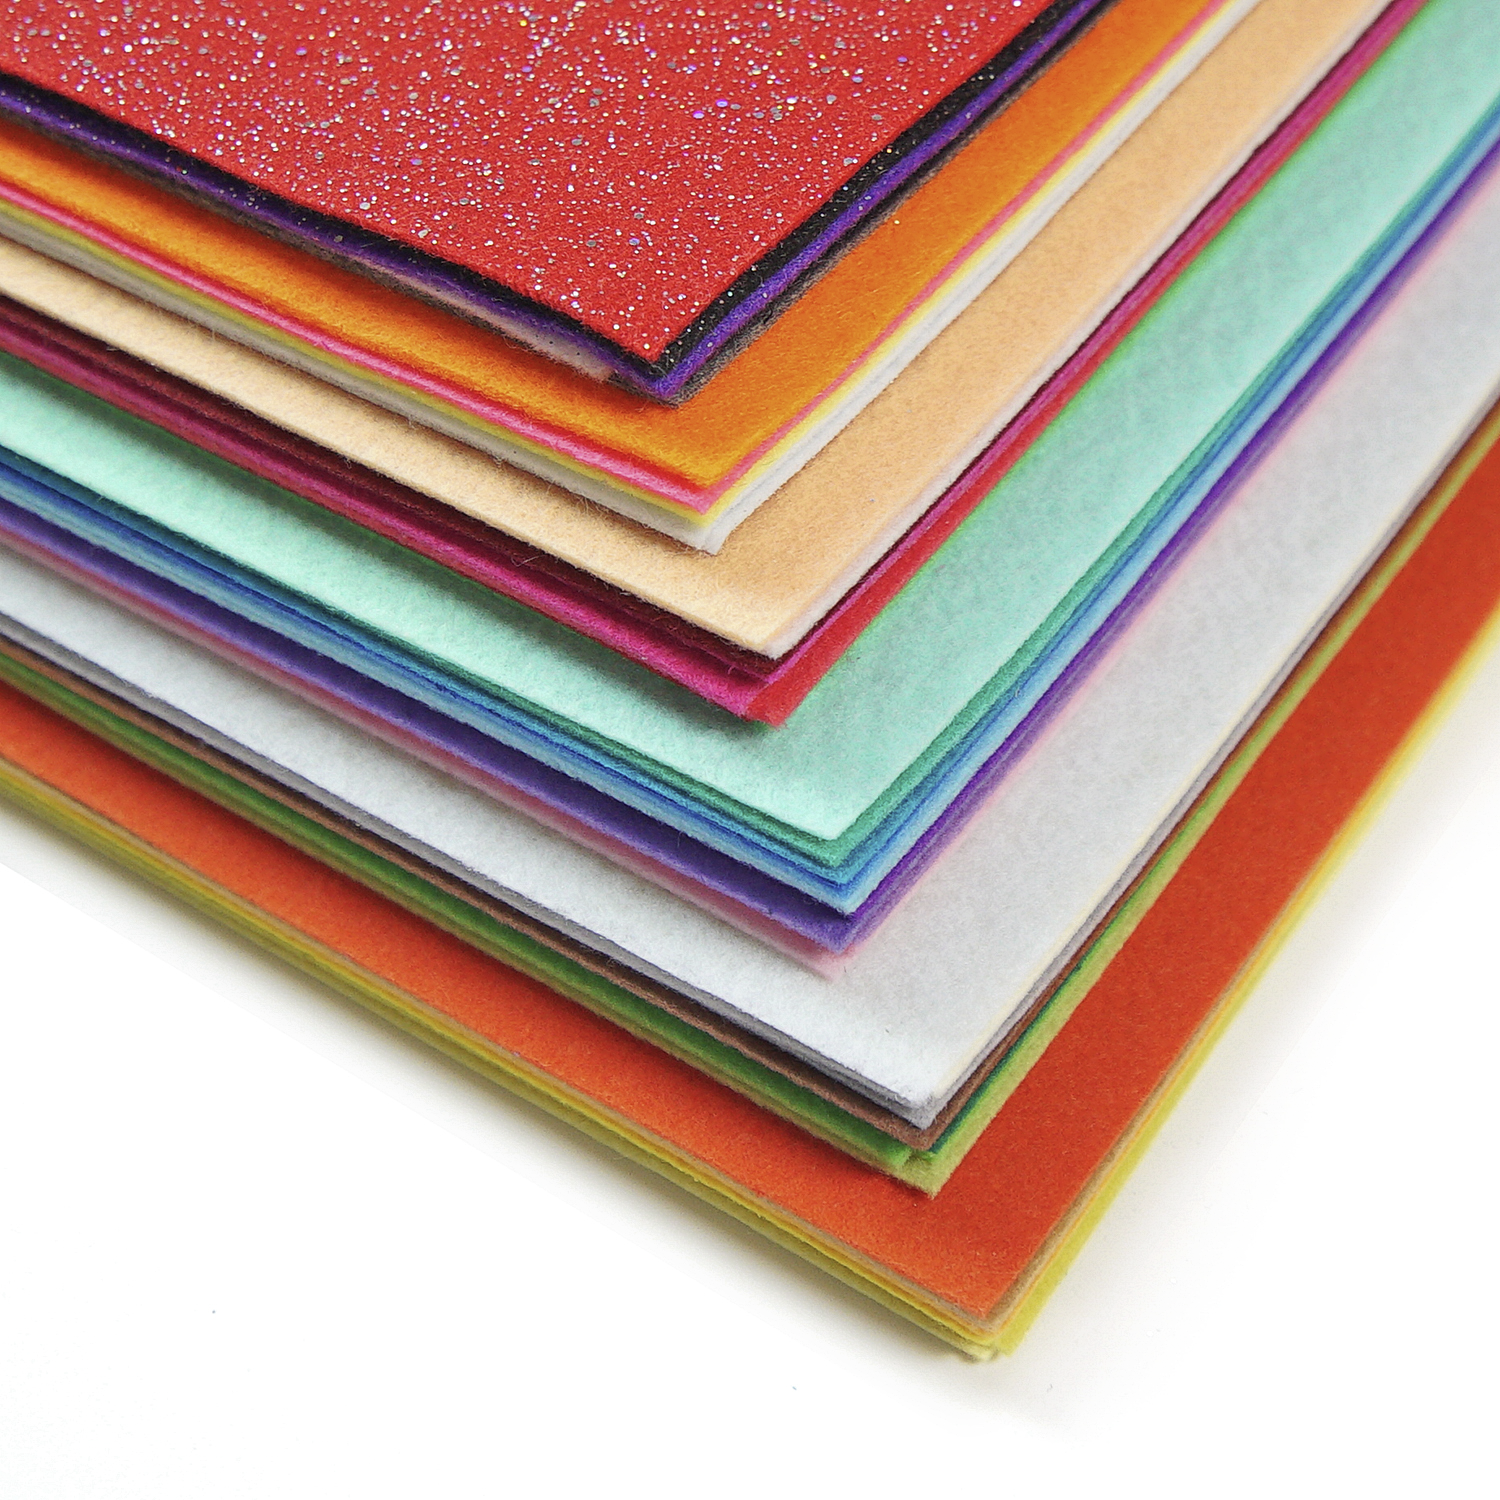 Arteza Adhesive Felt Fabric, Assorted Colors, 8.3 x 11.8 Sheets - Set of  30